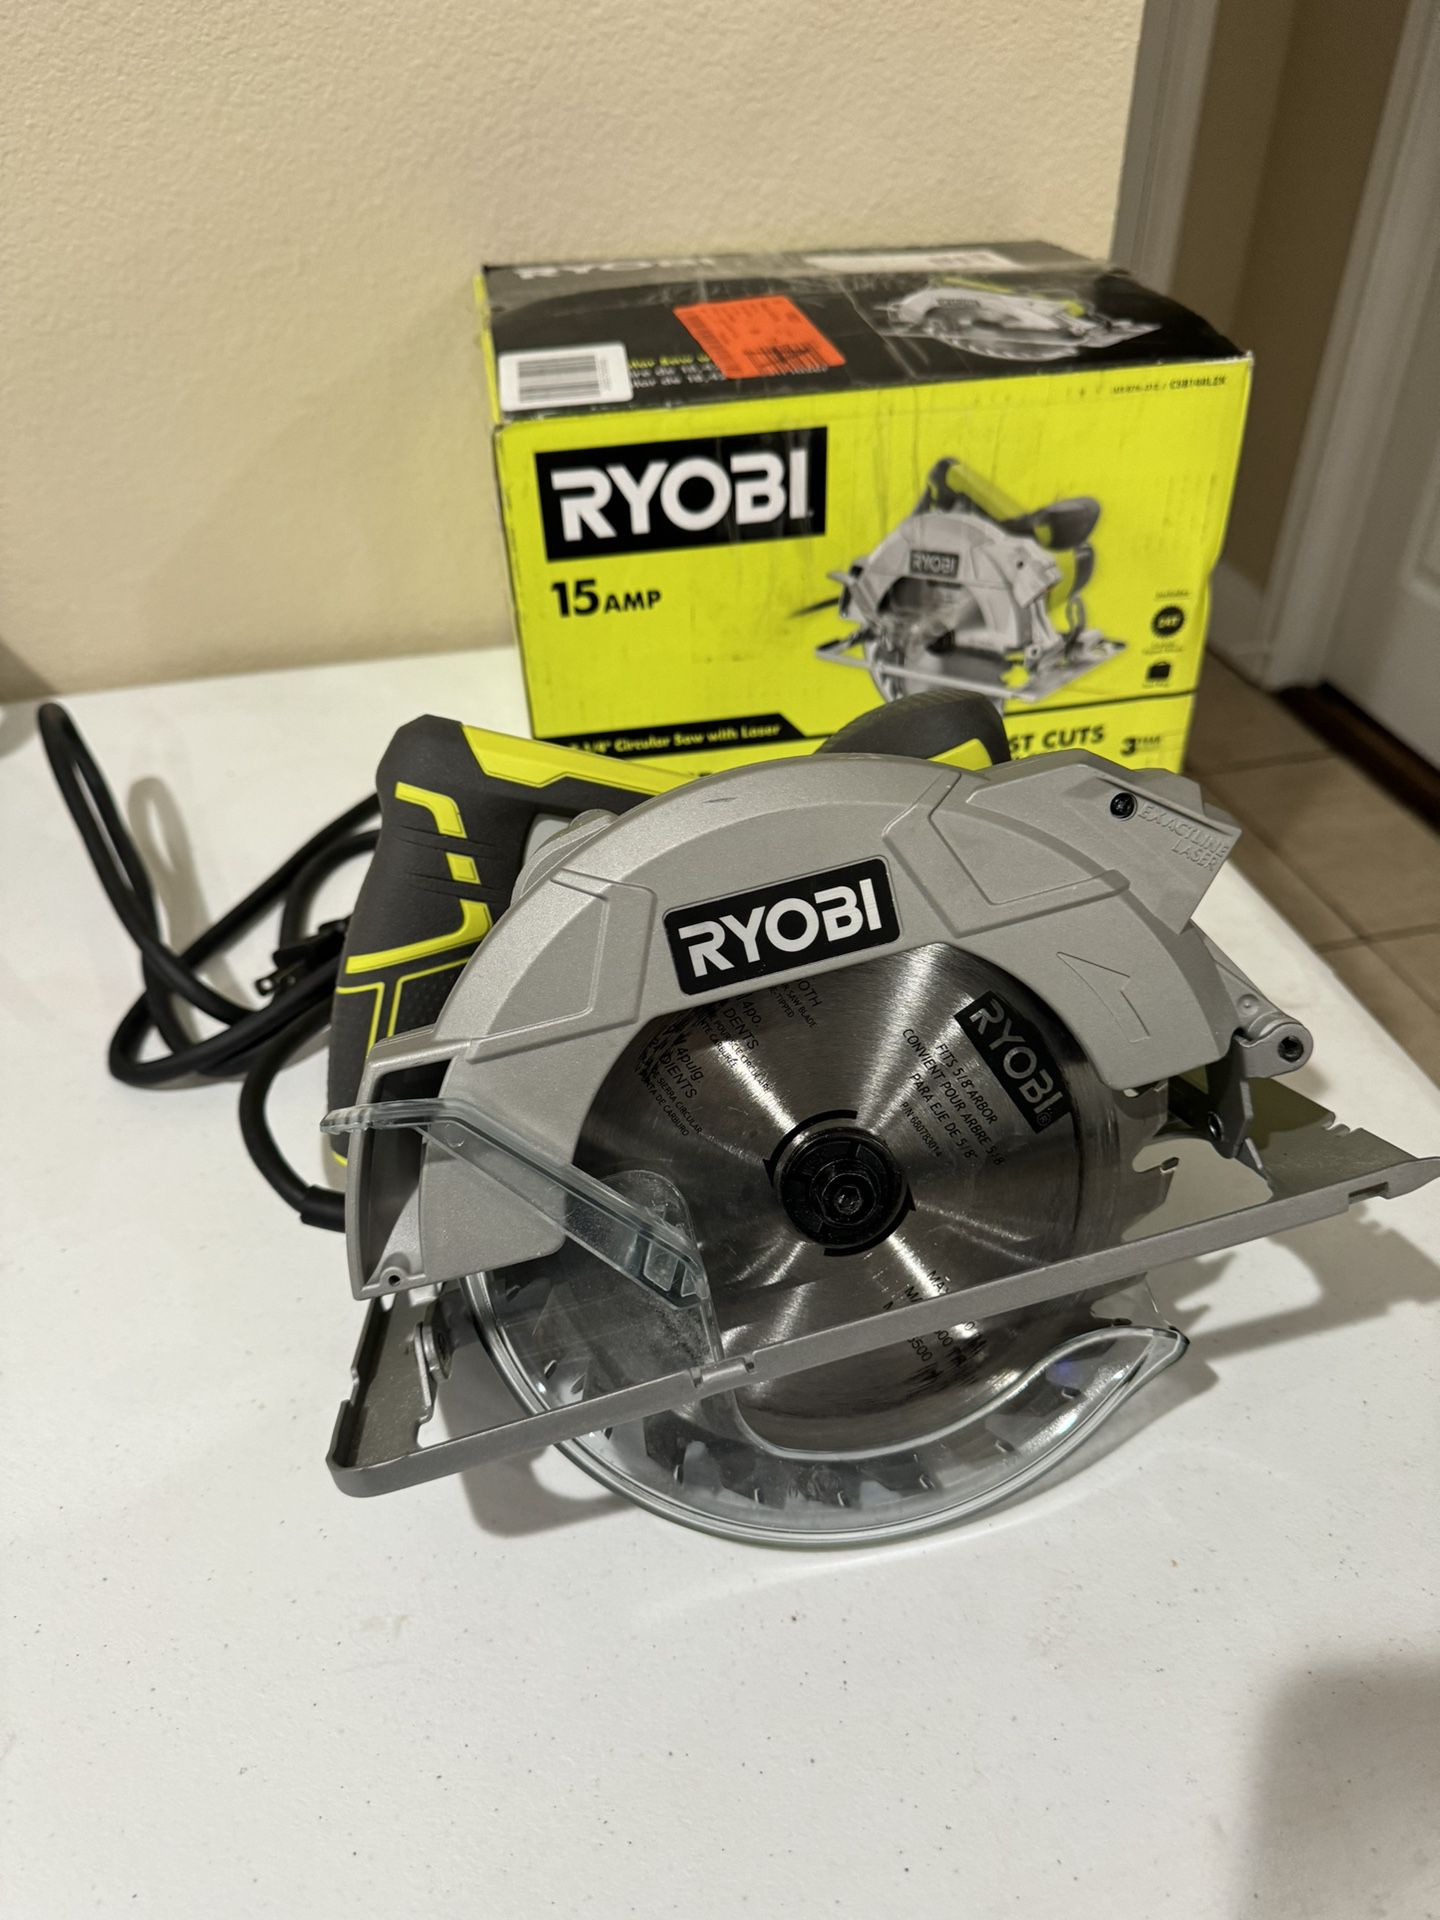 RYOBI 7- 1/4” Circular Saw with Laser. 